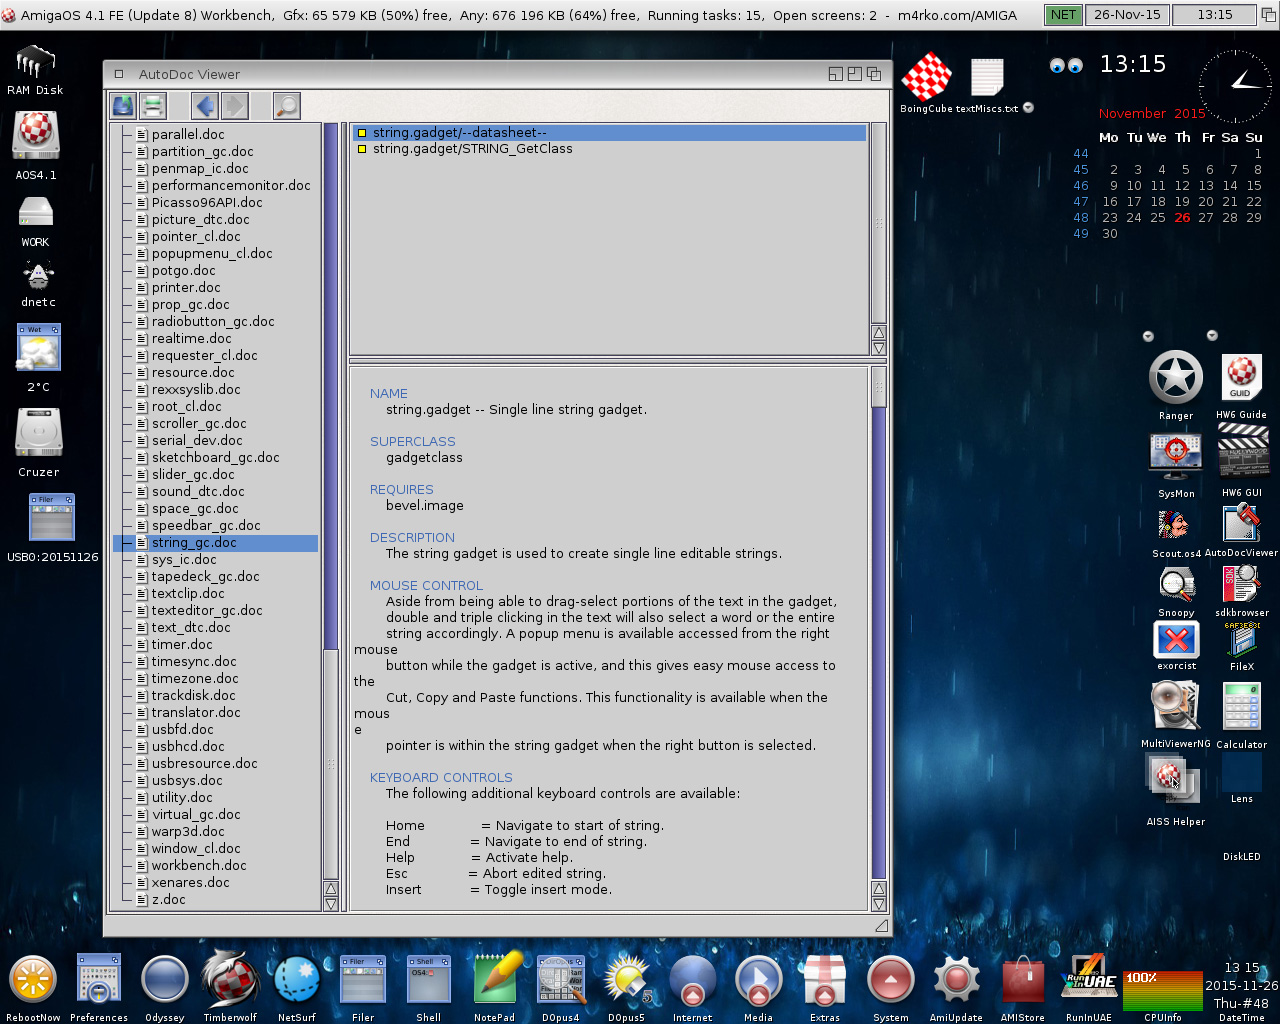 AutoDock Viewer-AmigaOS 4.1 FE-Update 8-Workbench-AOS4.1u8